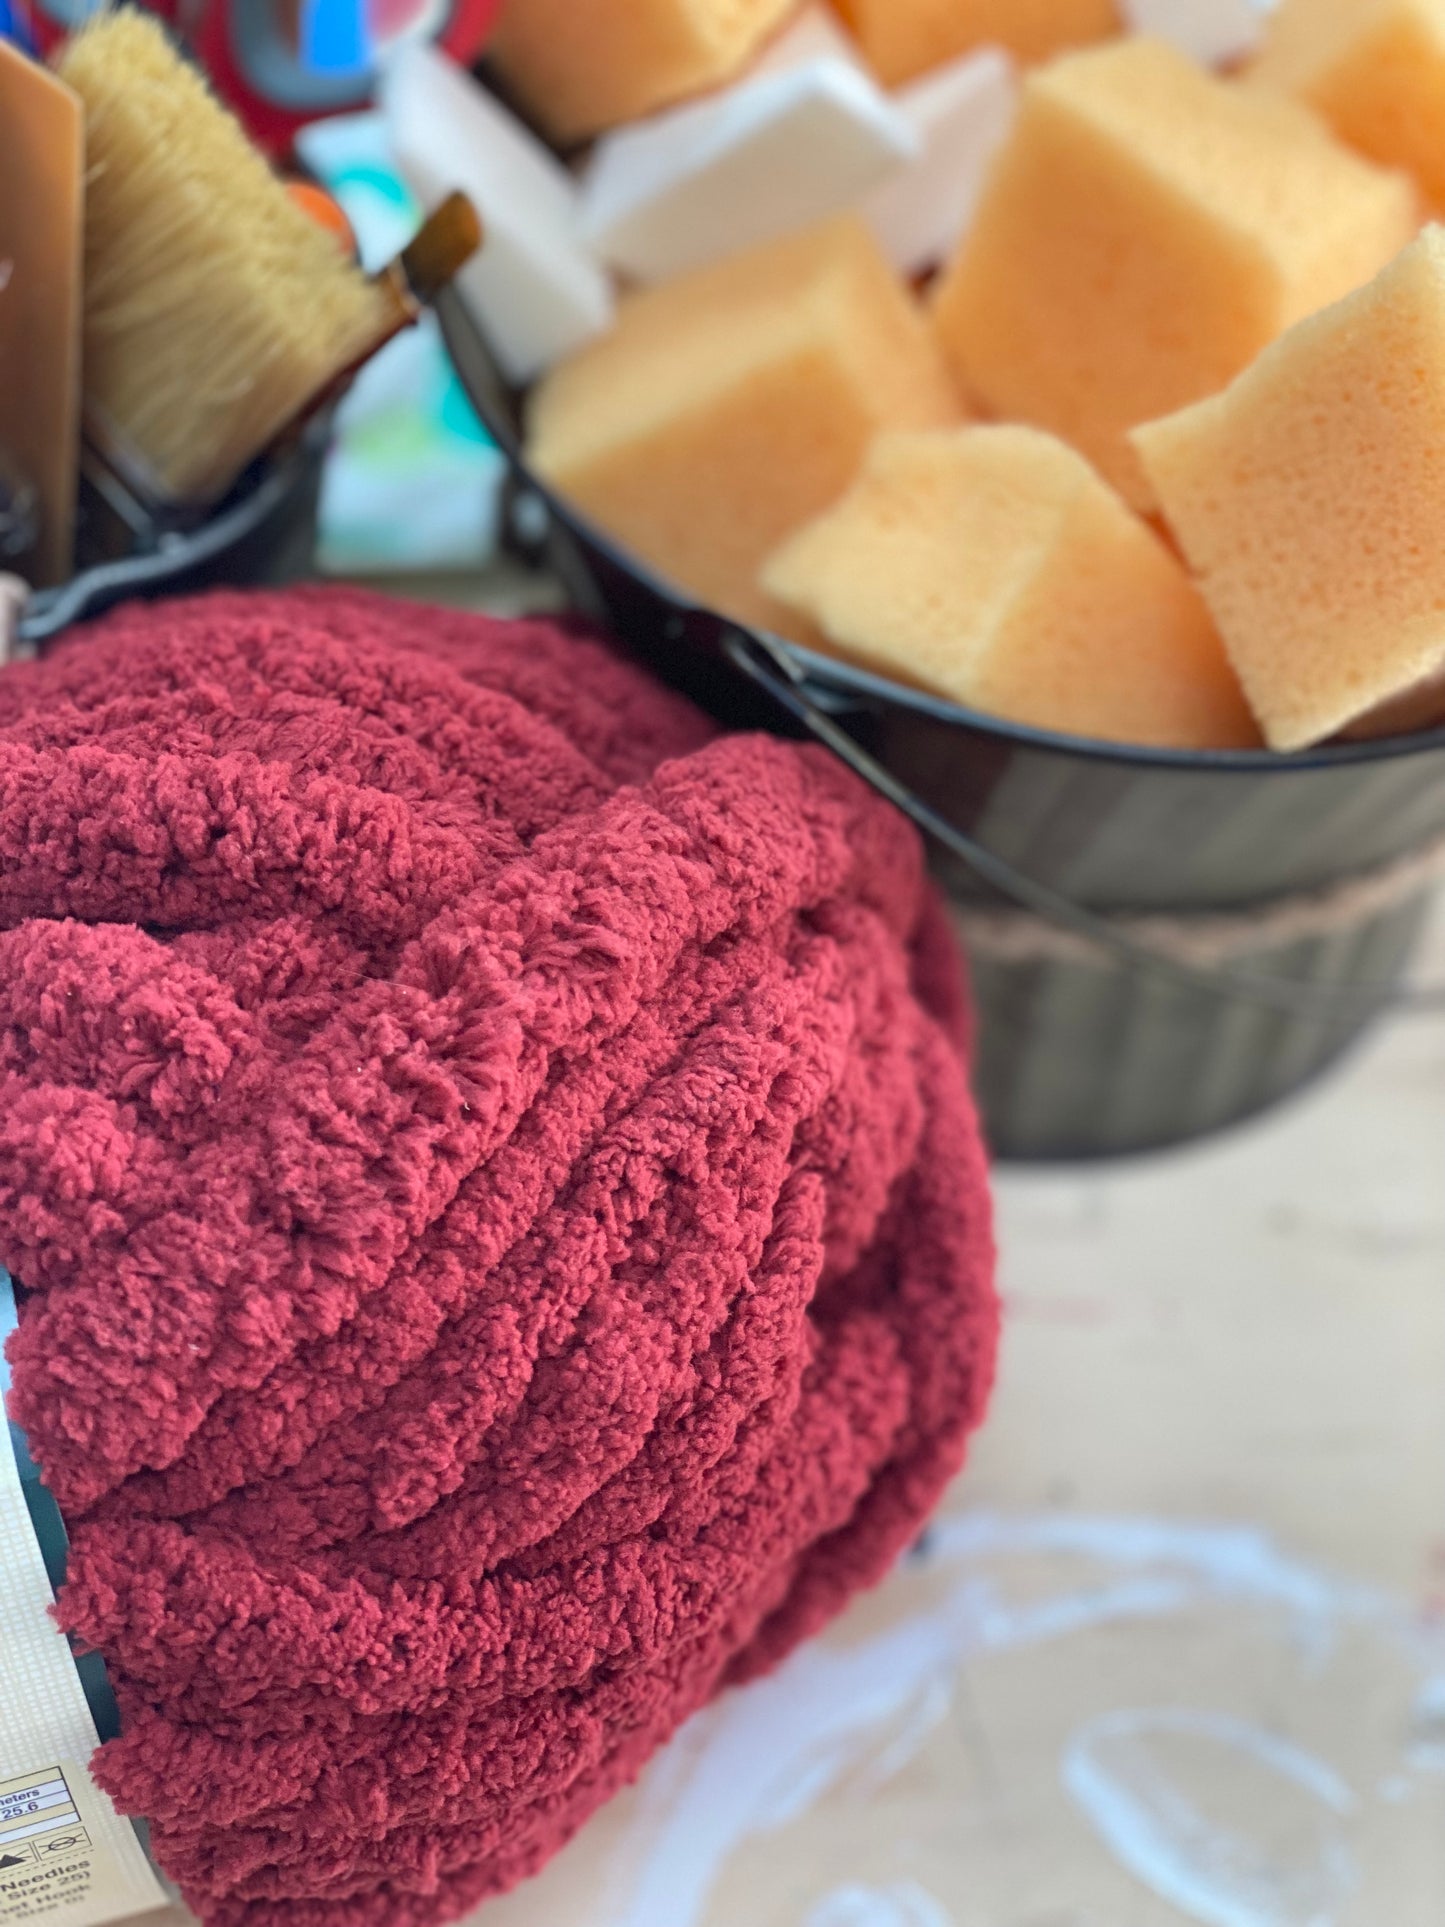 chunky knit blanket